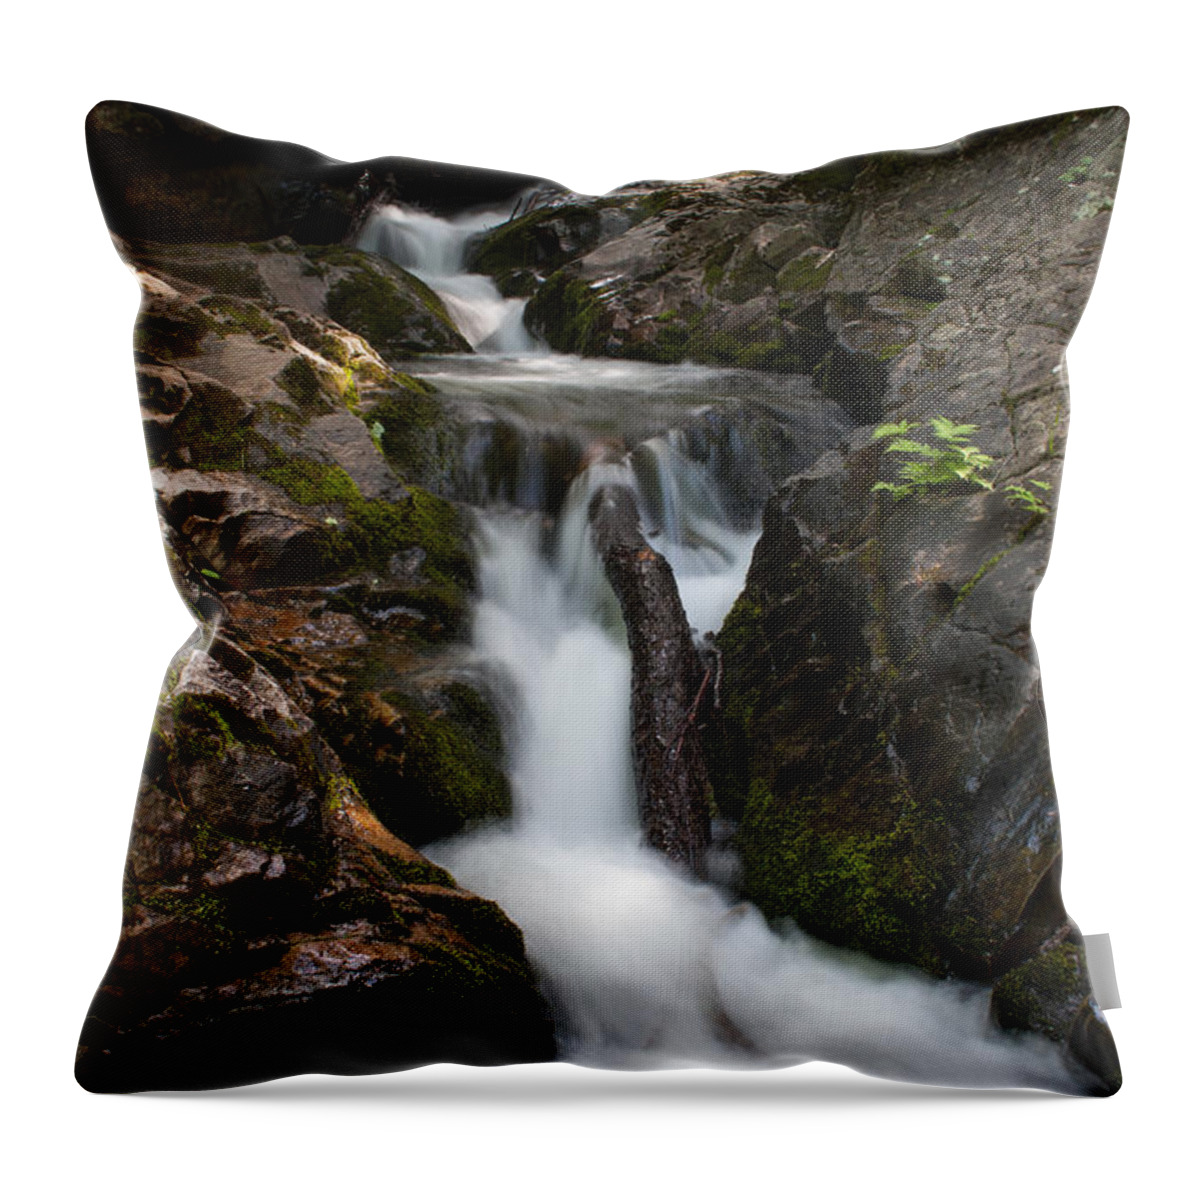 Waterfall Throw Pillow featuring the photograph Upper Pup Creek Falls by Paul Rebmann